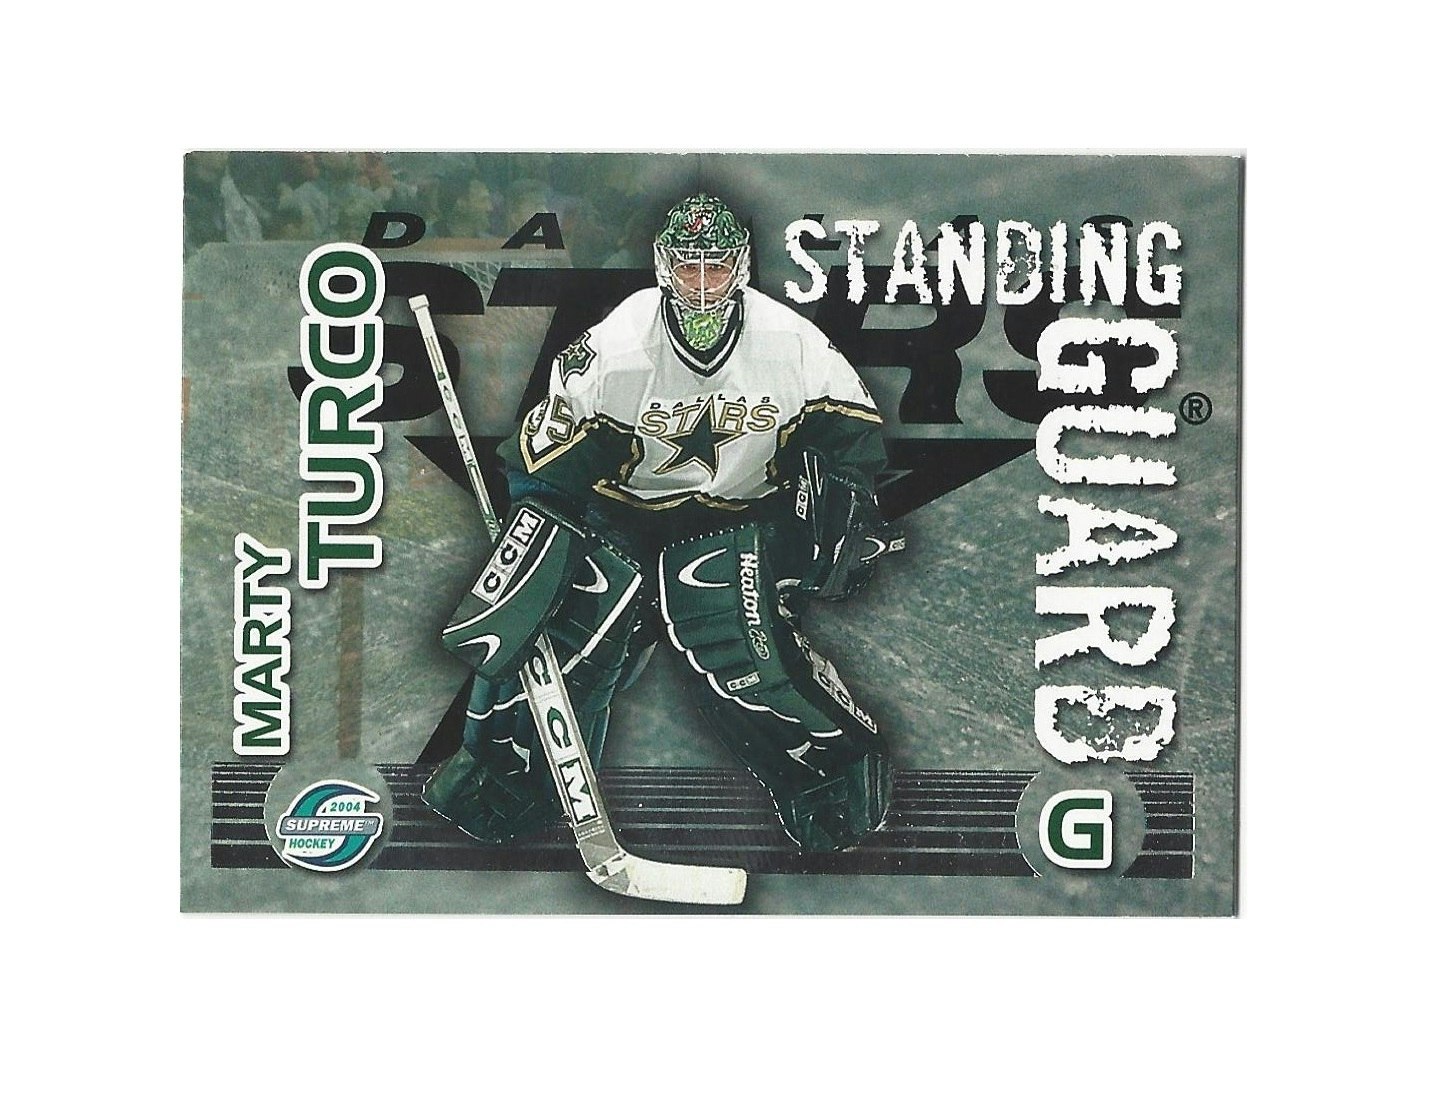  (CI) Marty Turco Hockey Card 2003-04 Pacific Marty Turco 2 Marty  Turco : Collectibles & Fine Art